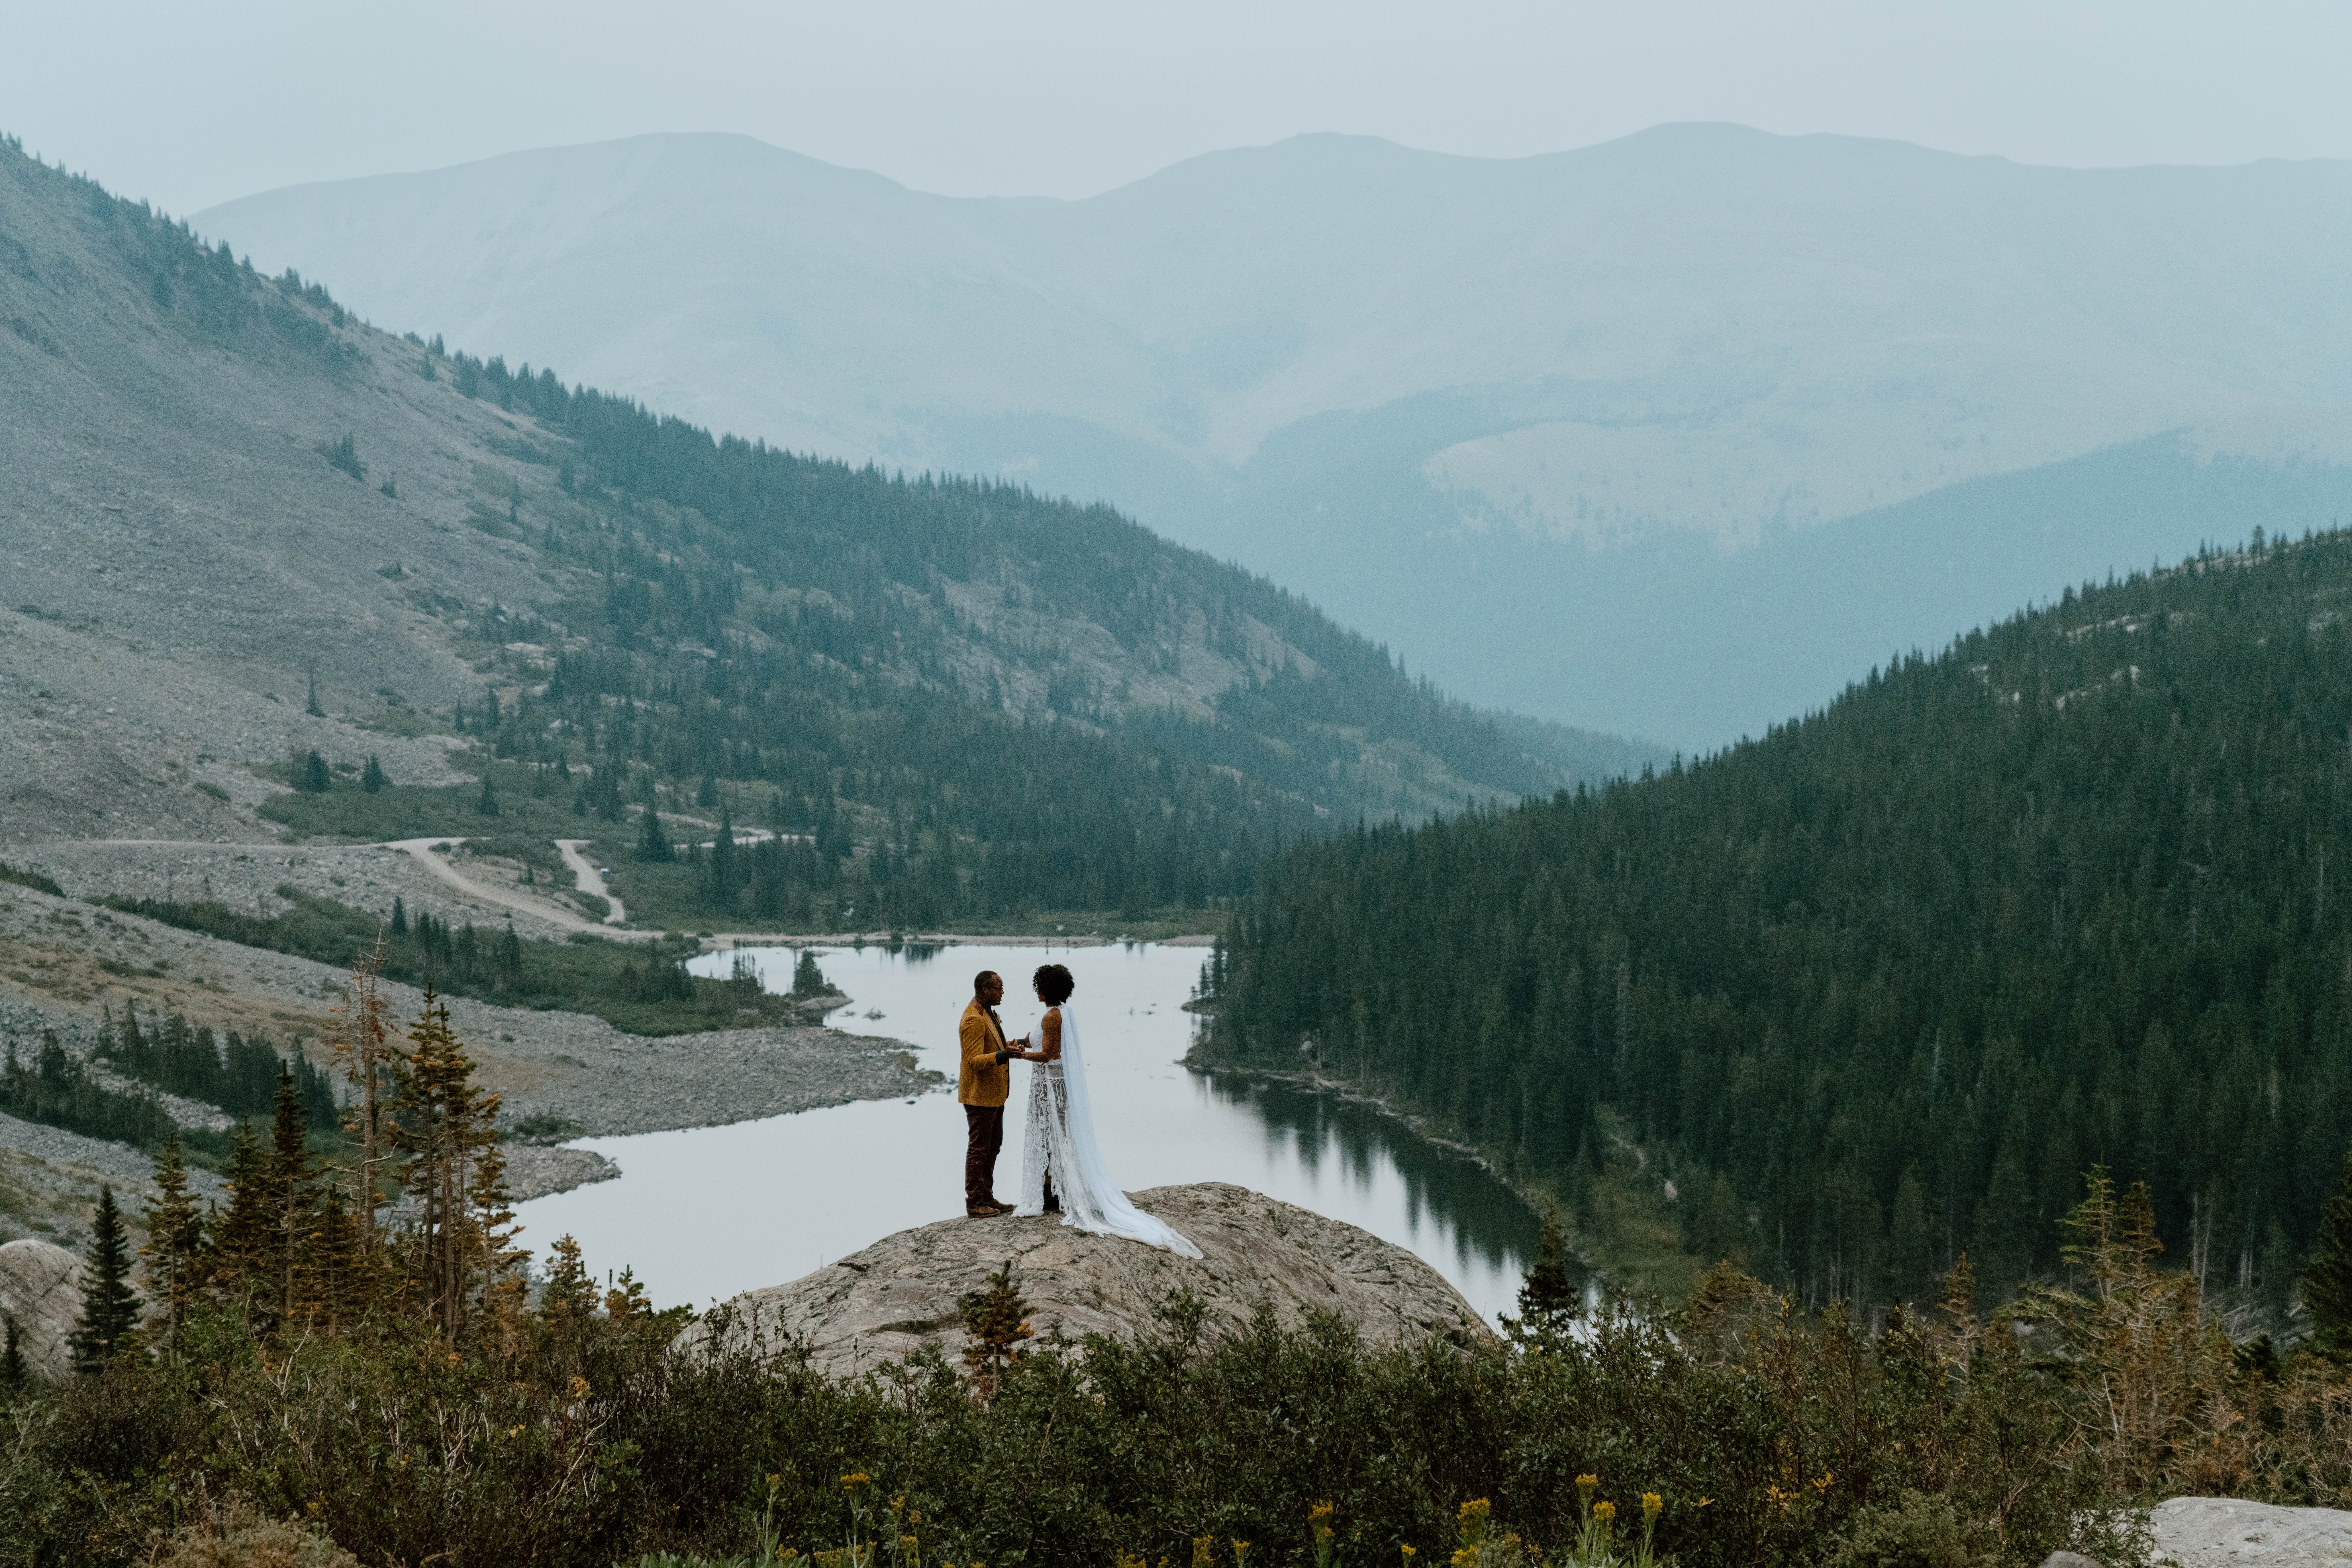 A couple in wedding attire celebrates their adventurous hiking elopement in Colorado